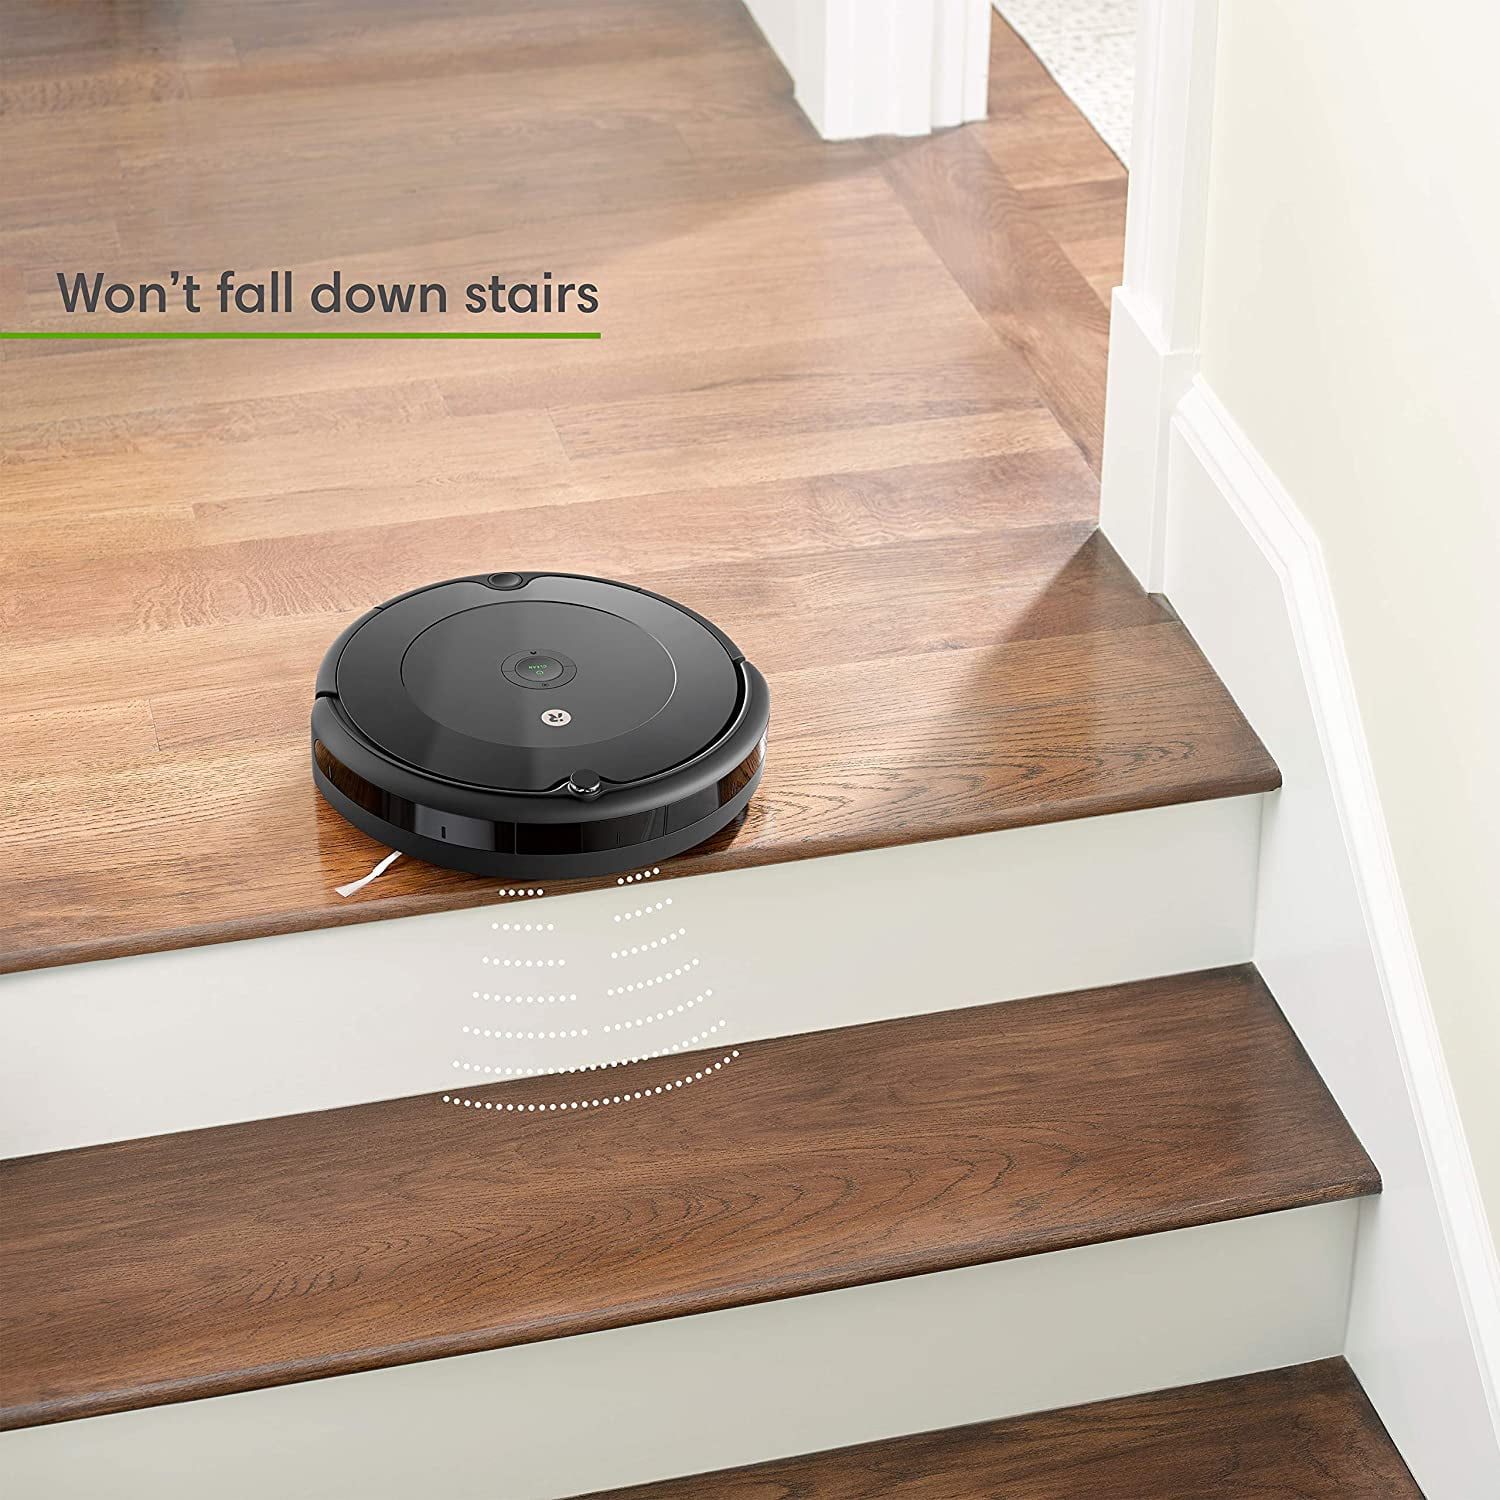 iRobot Aspiradora Robot Roomba 675 compatible con Alexa y Google assistant